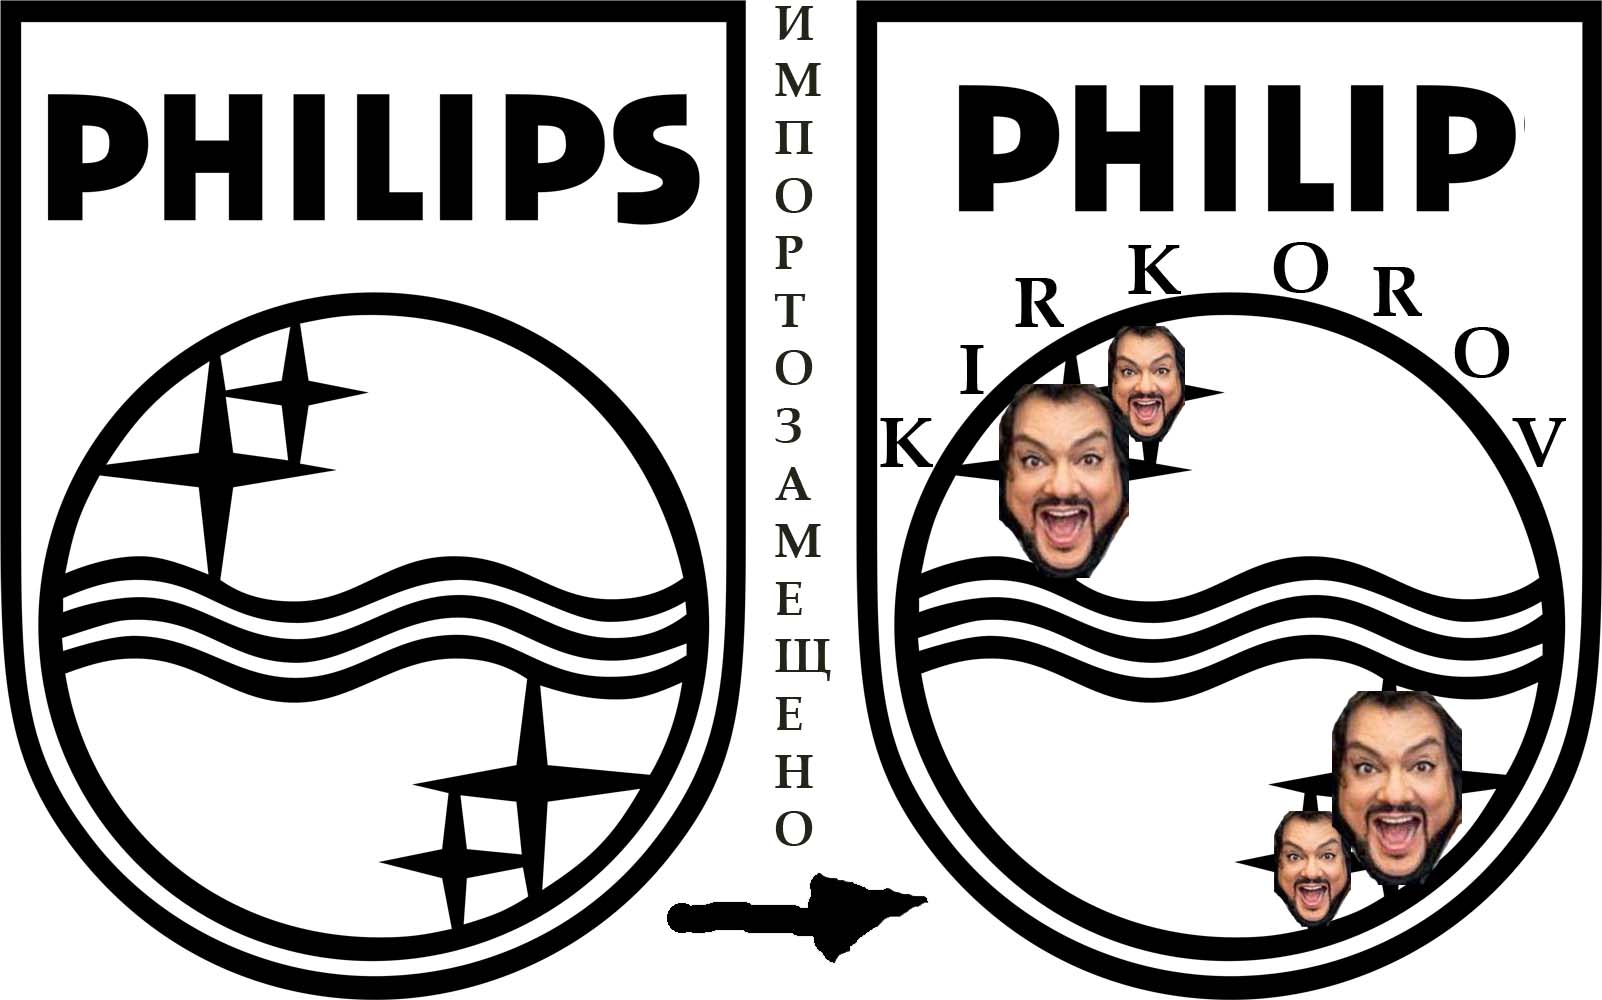 Philips is already importochanged to Philip Kirkorov Филипс уже импортозамещён на Филипа Киркорова